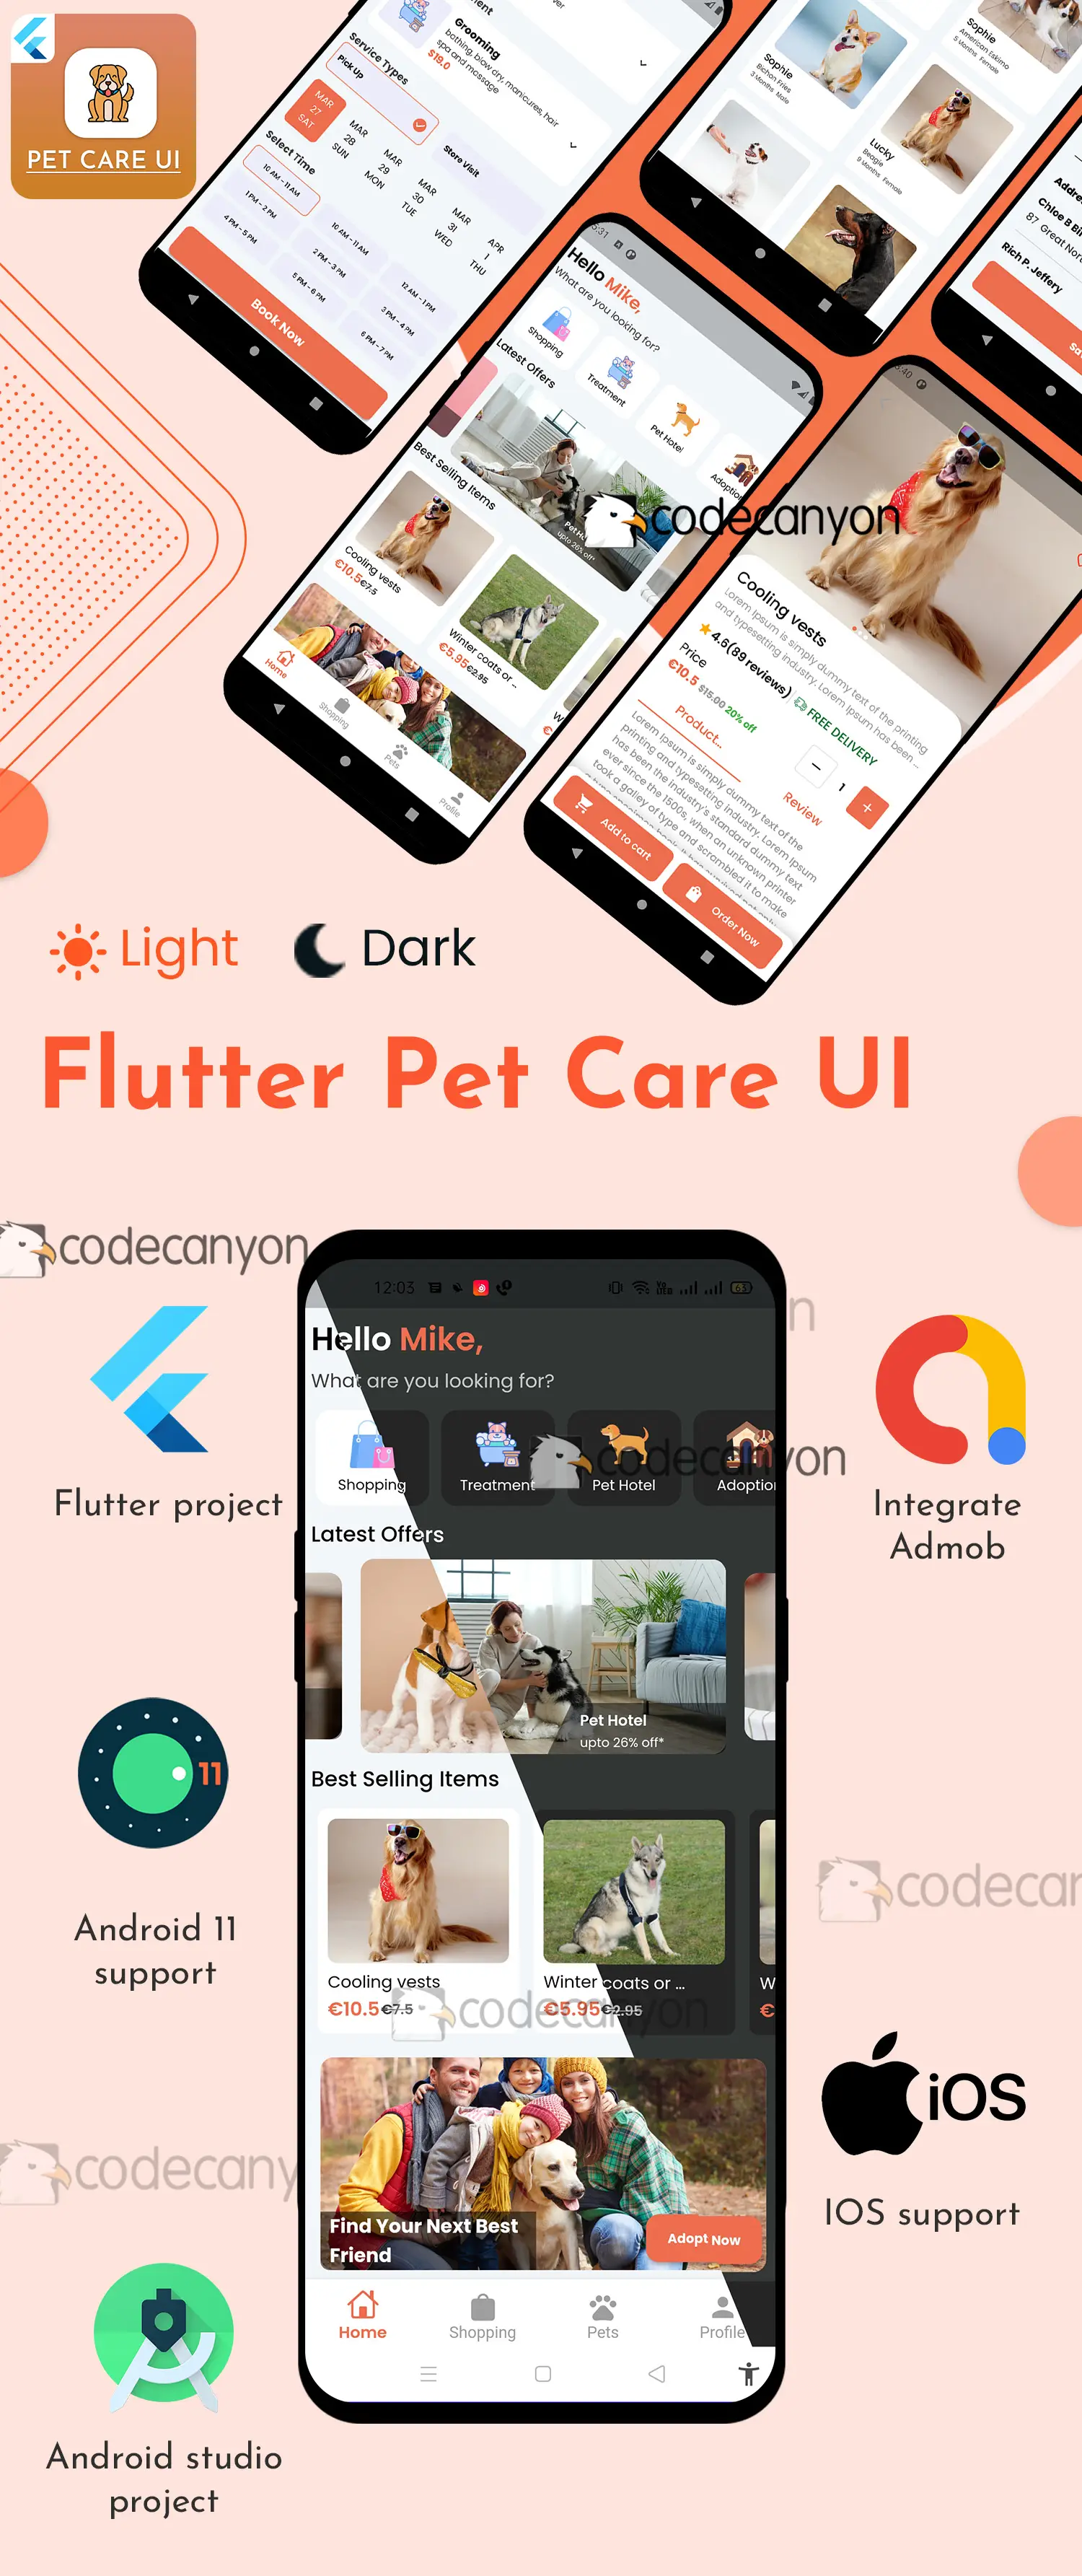 Flutter Pet Care | Adoption Pet | Hotel Booking | Treatment | Shopping | UI Kit template - 8